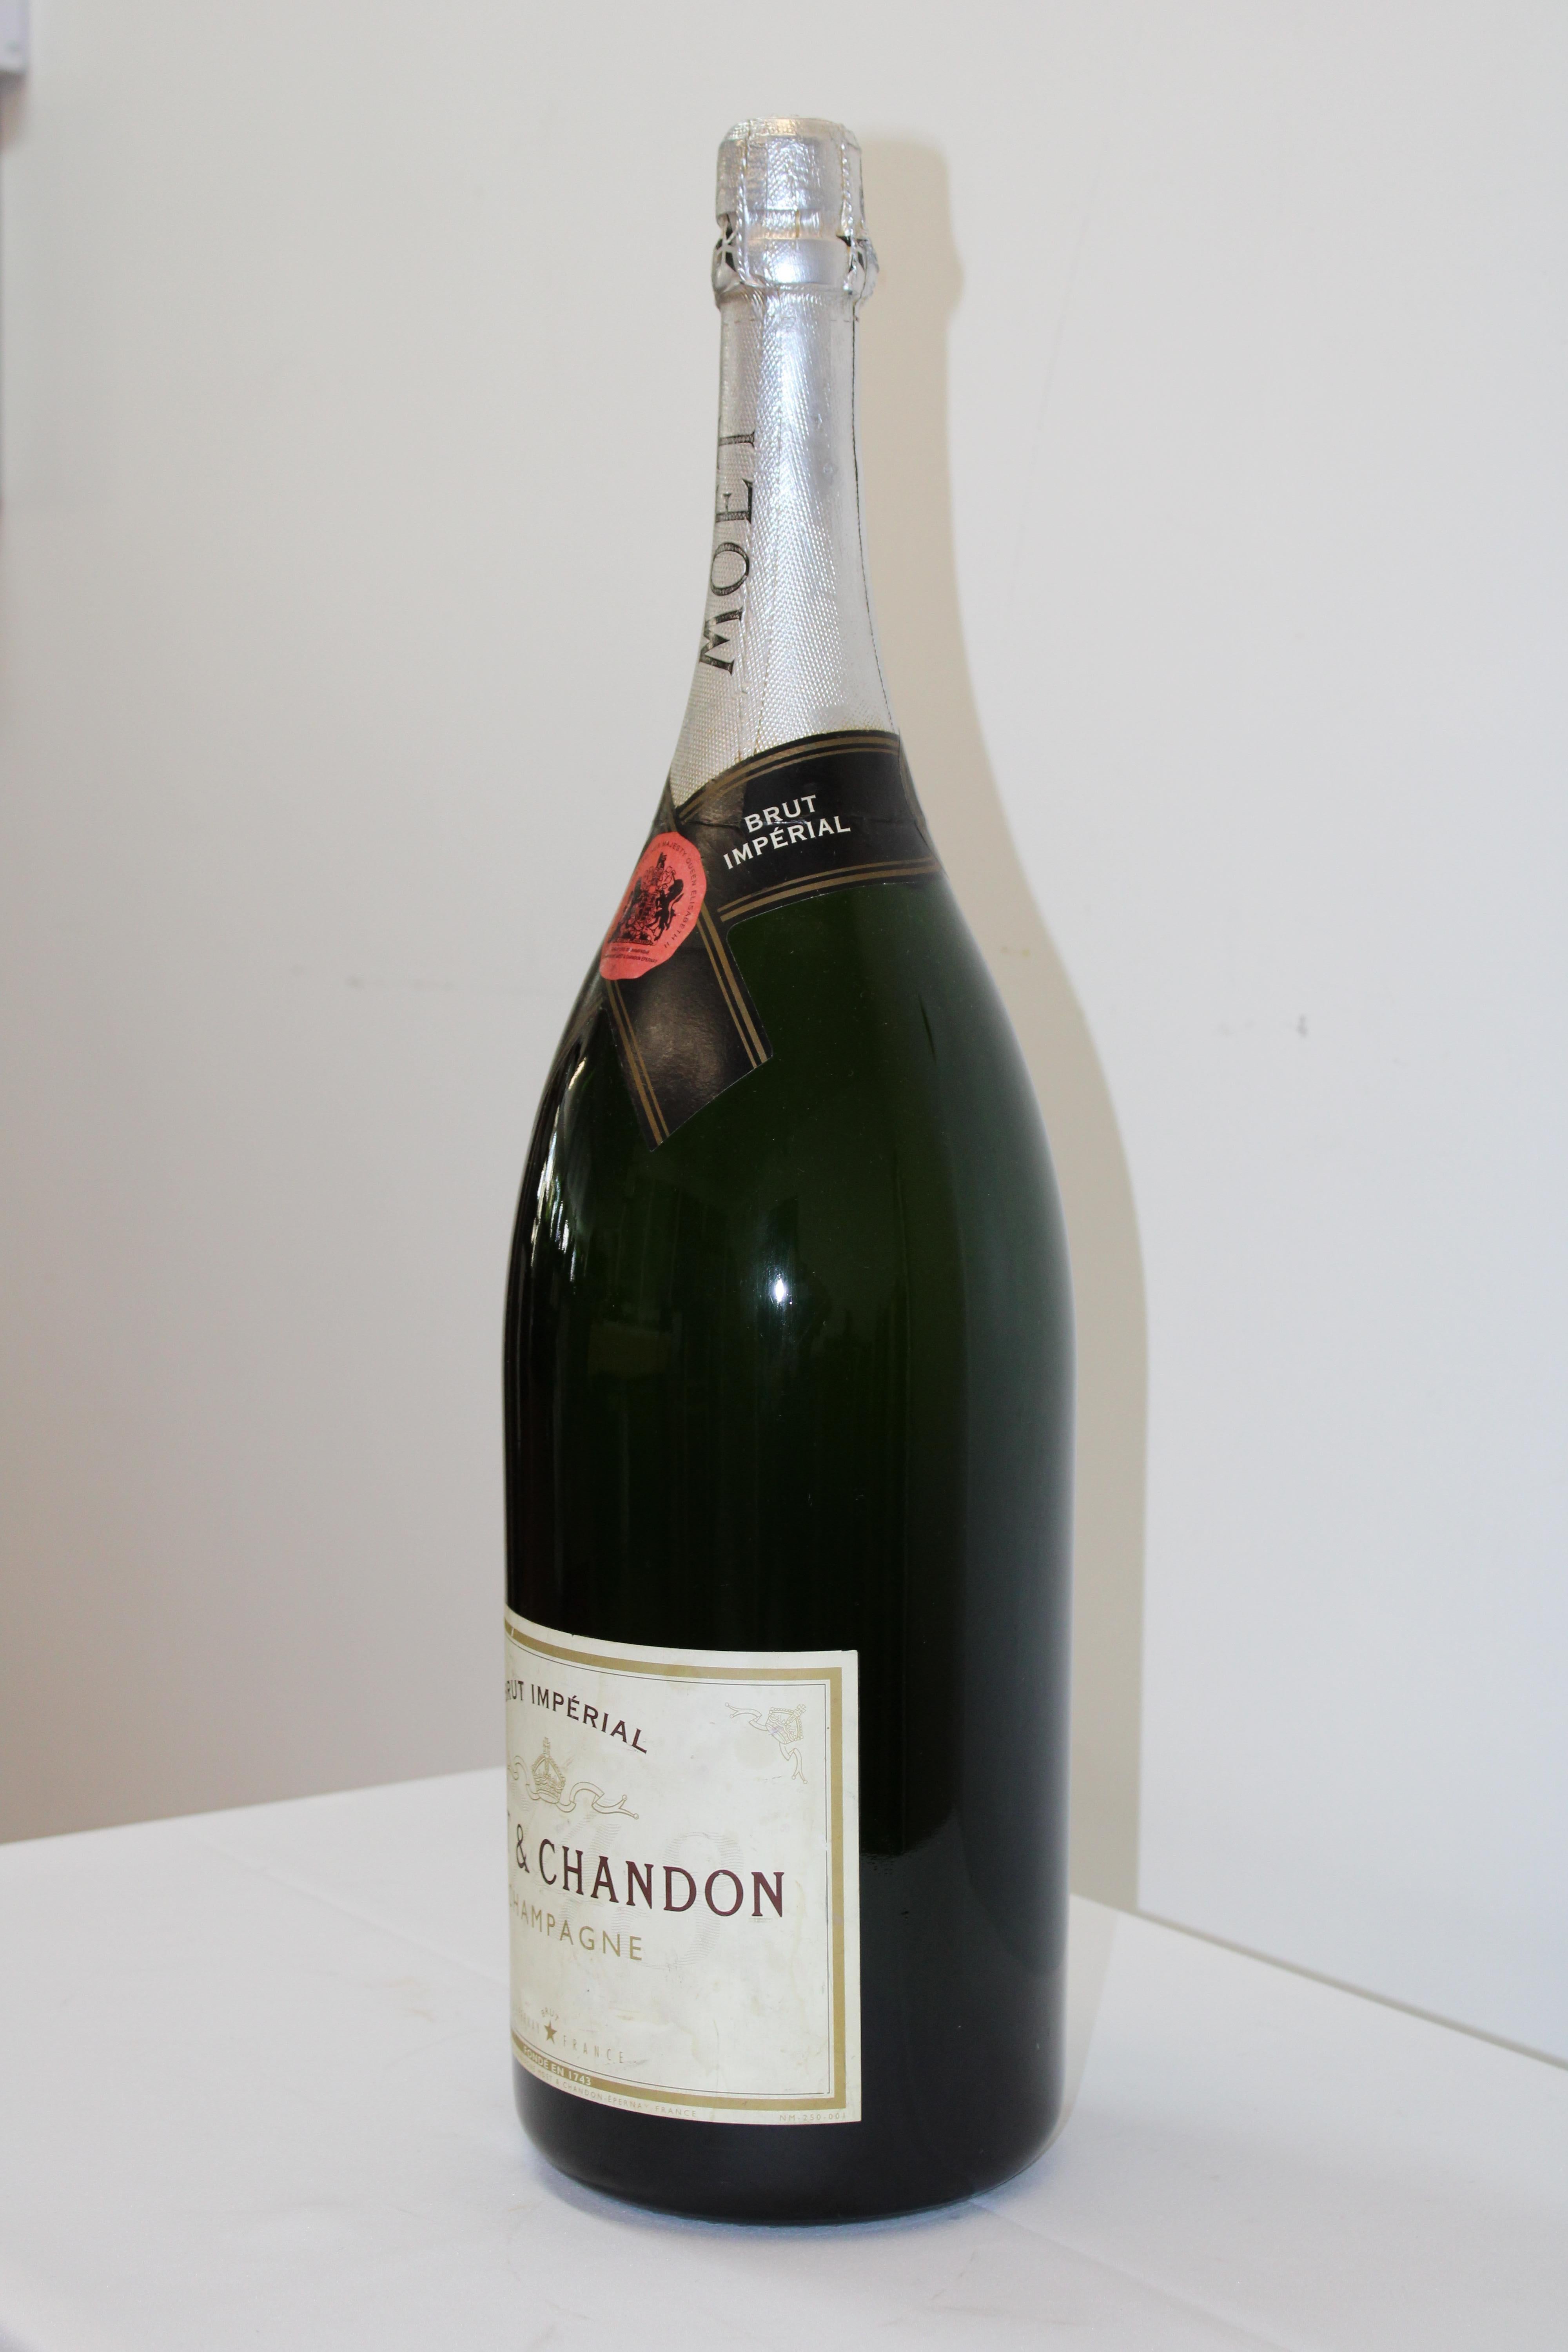 display champagne bottles